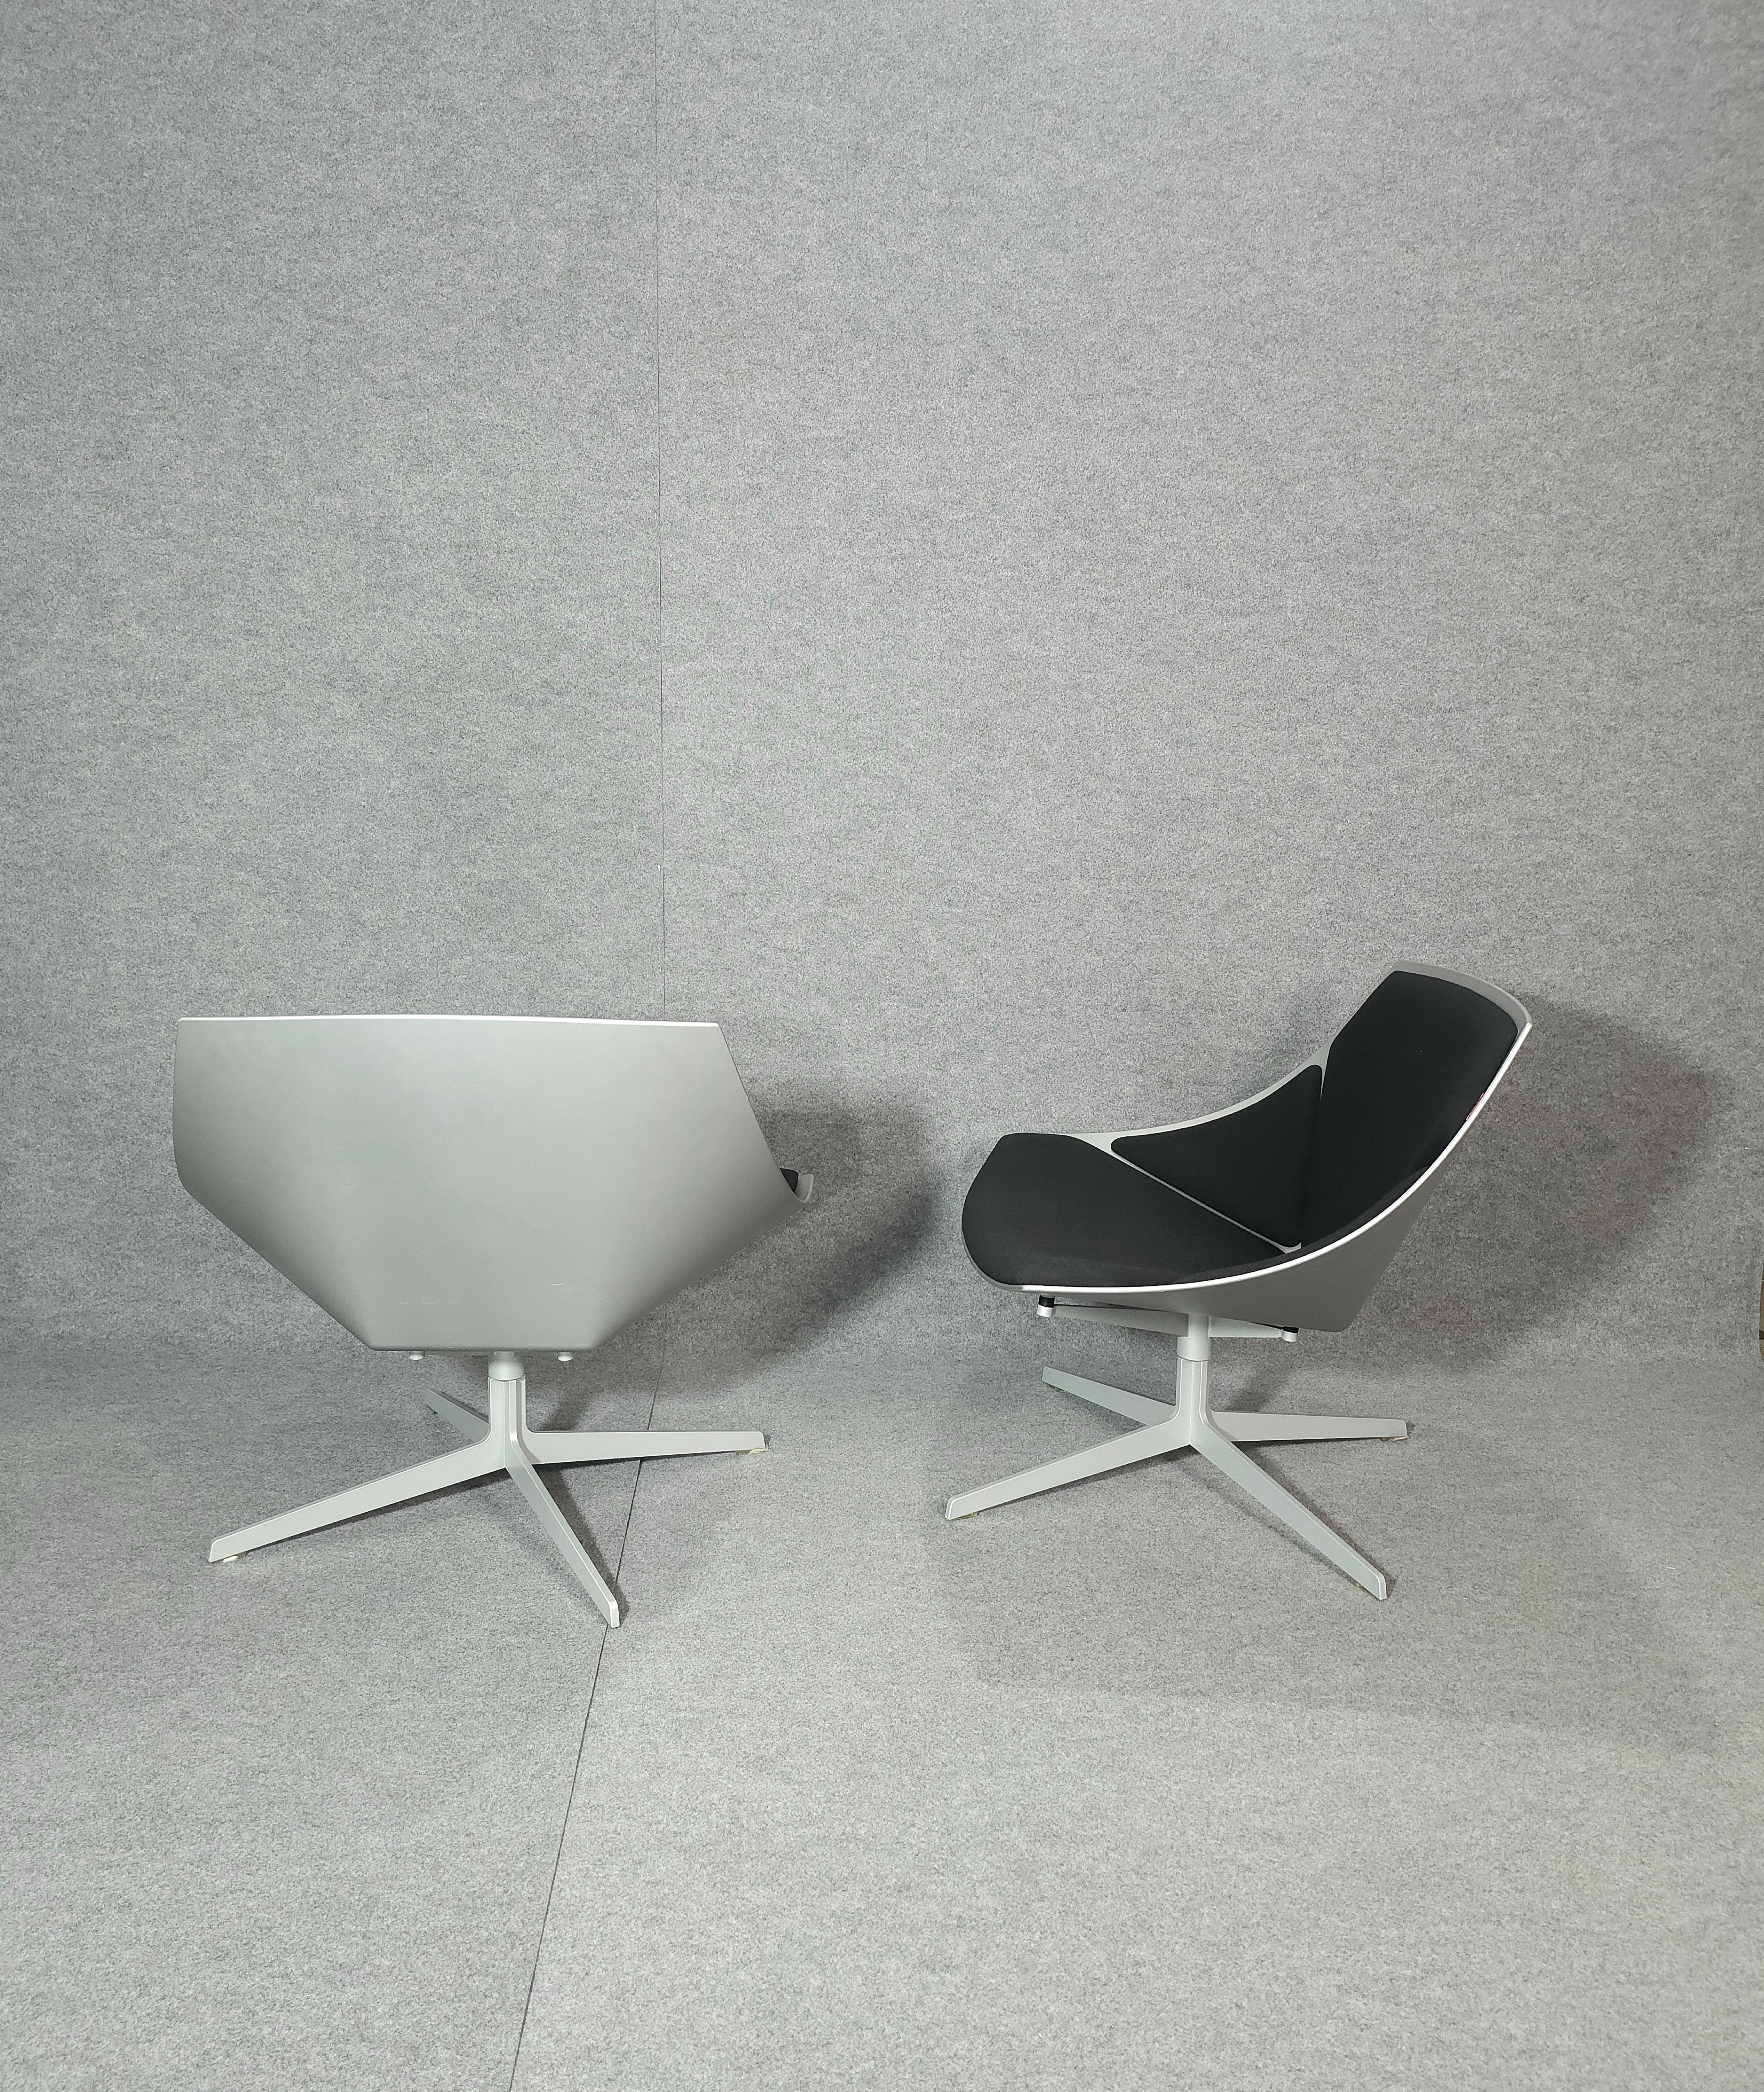 Jehs & Laub for Fritz Hansen Swivel Chair Modern Pair Denmark Design 2007 In Good Condition For Sale In Palermo, IT